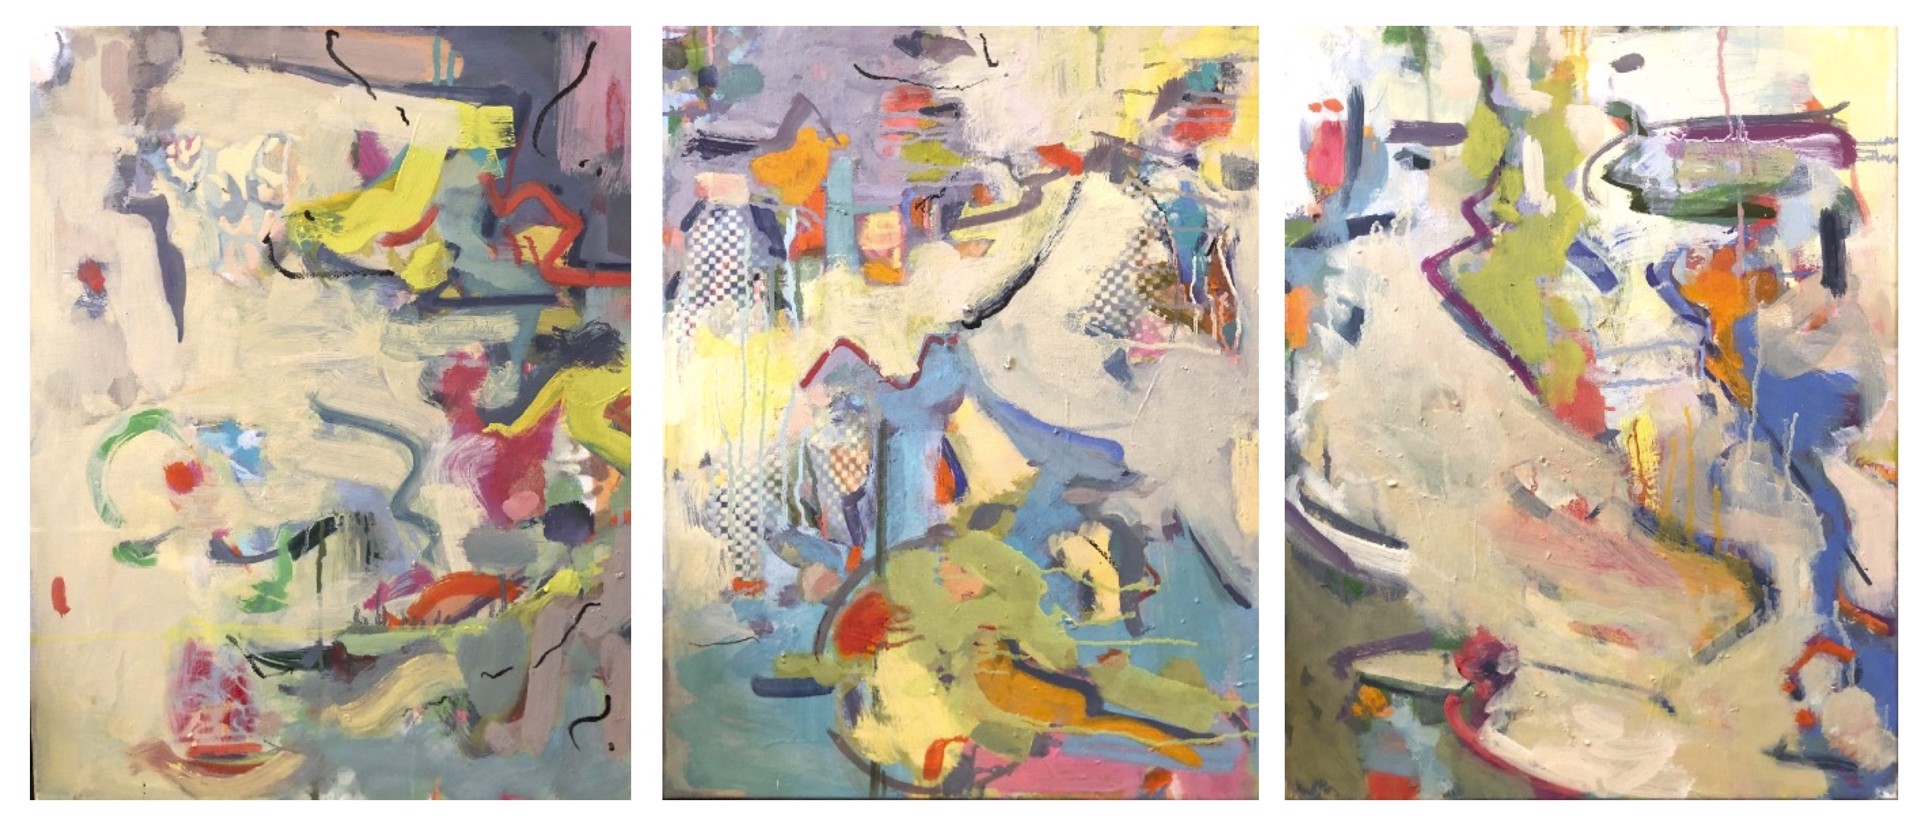 Untitled Triptych, 1, 2, 3 by Gina Werfel